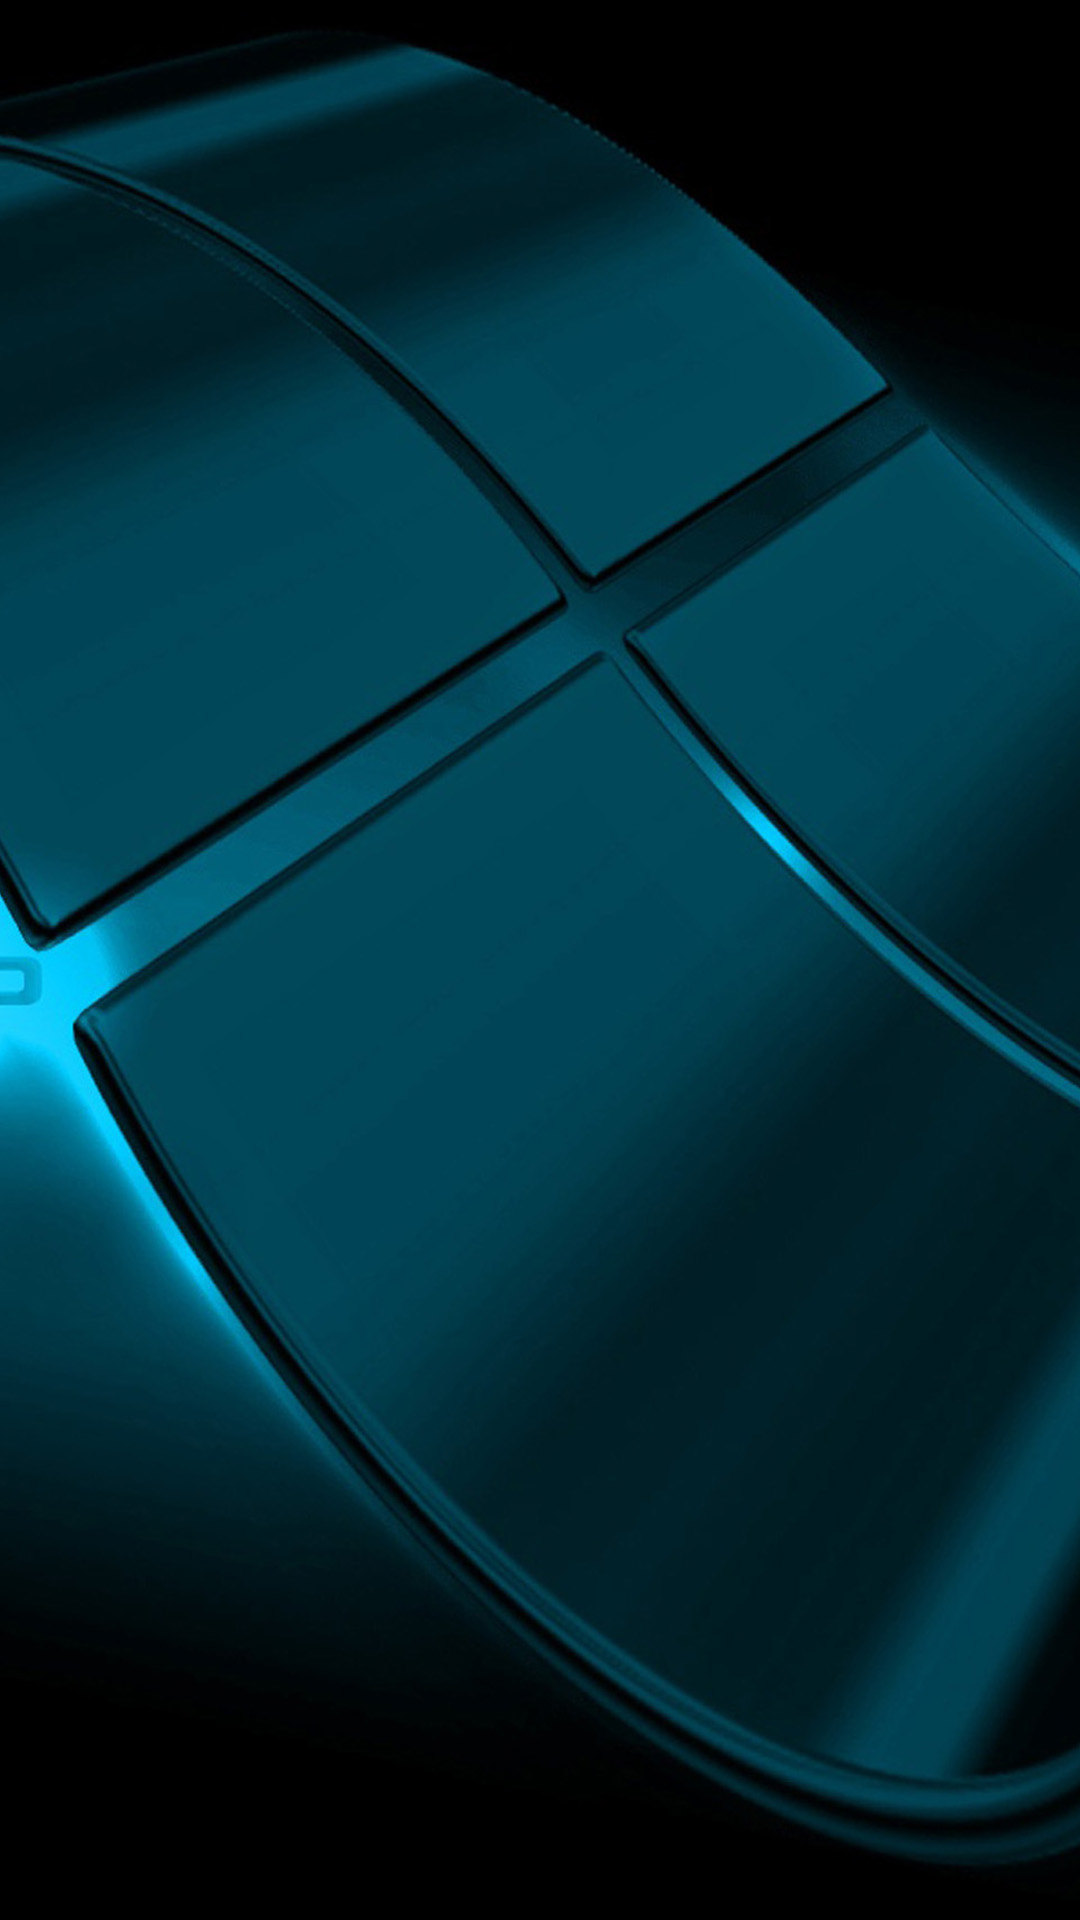 Windows Xp Blue Illusion iPhone And Plus